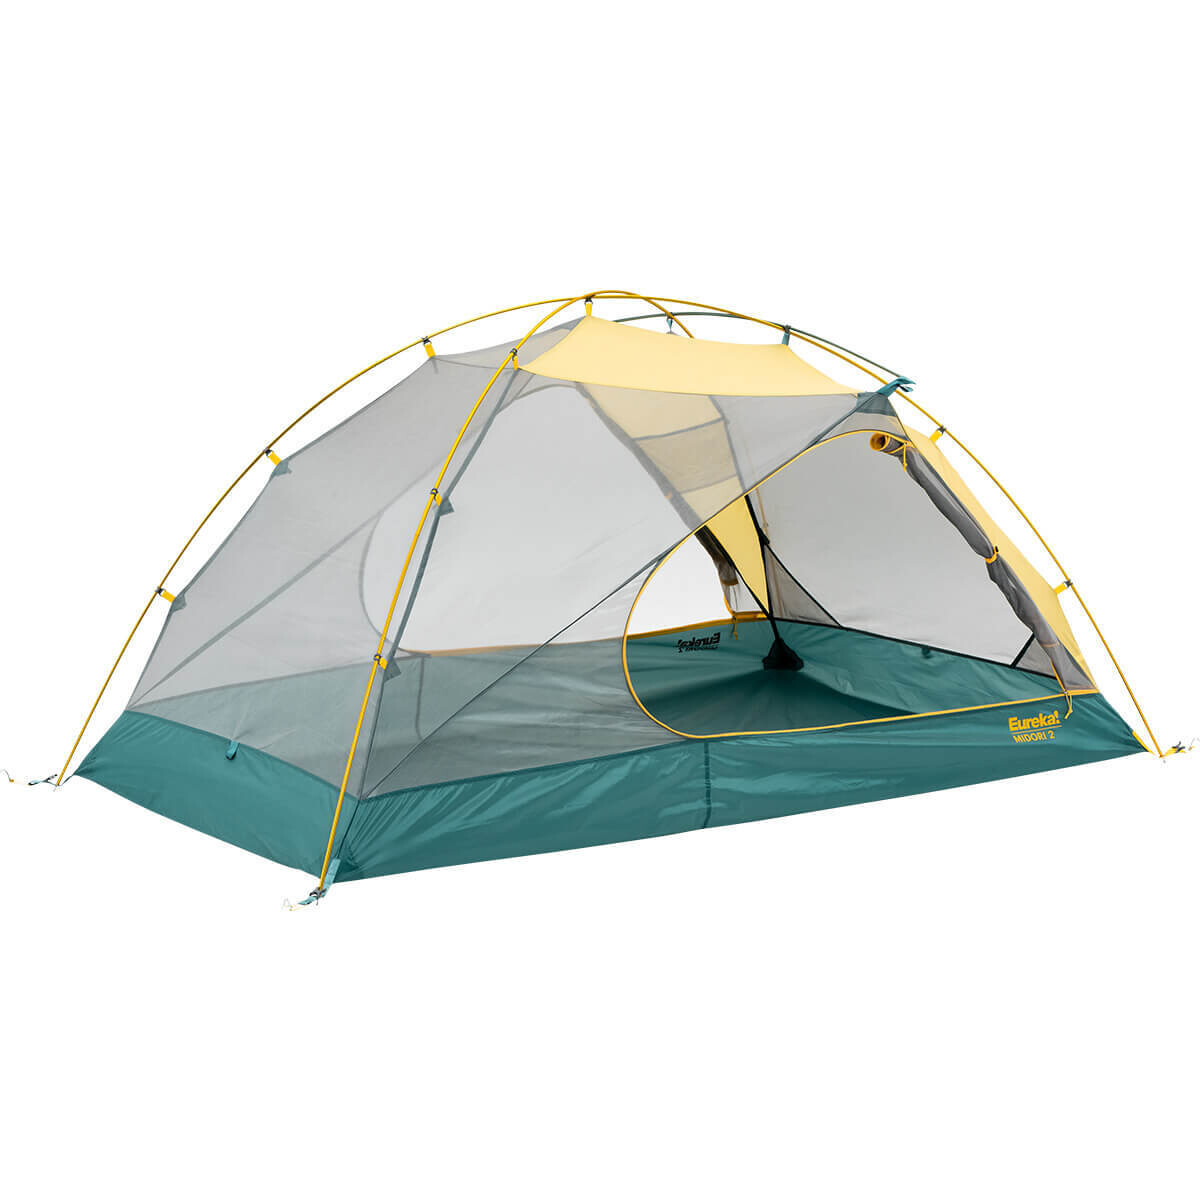 Eureka Midori 2 Person Backpacking Tent